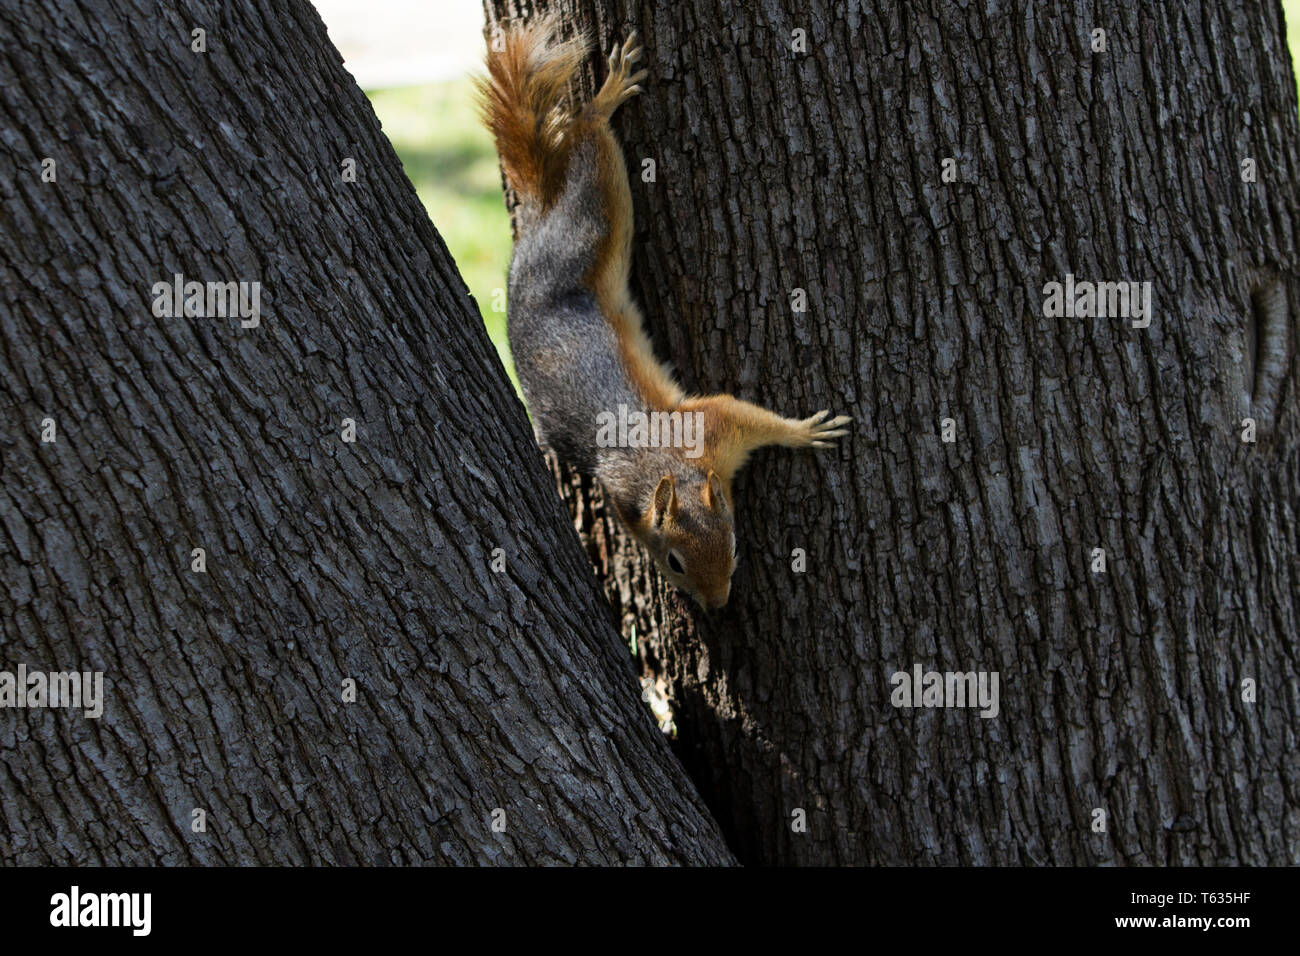 Close up portrait of a Sciurus Anomalus, Caucasian squirrel climbing down a tree. Stock Photo